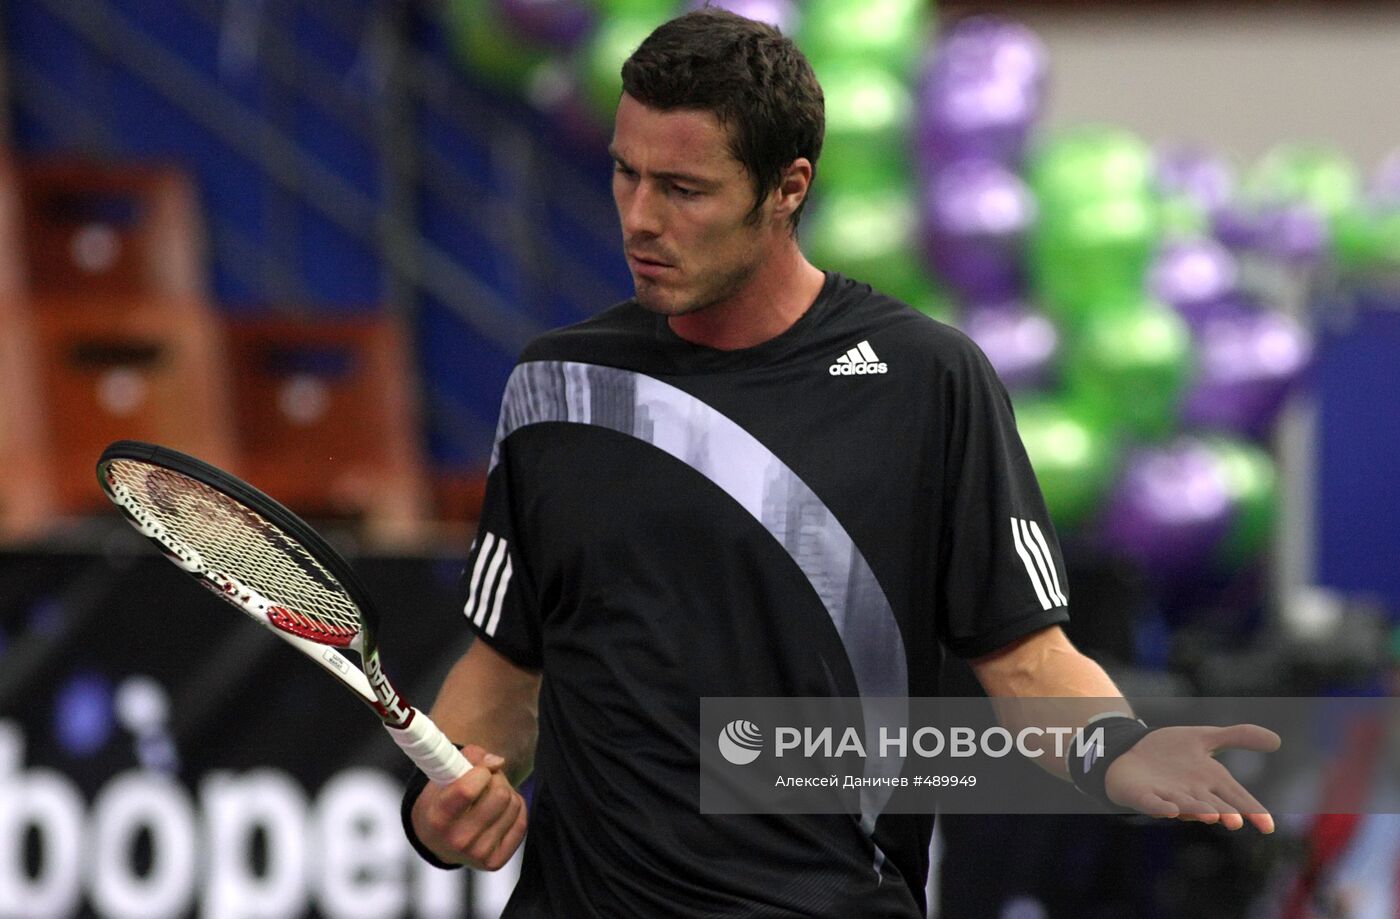 Марат Сафин. St. Petersburg Open 2009